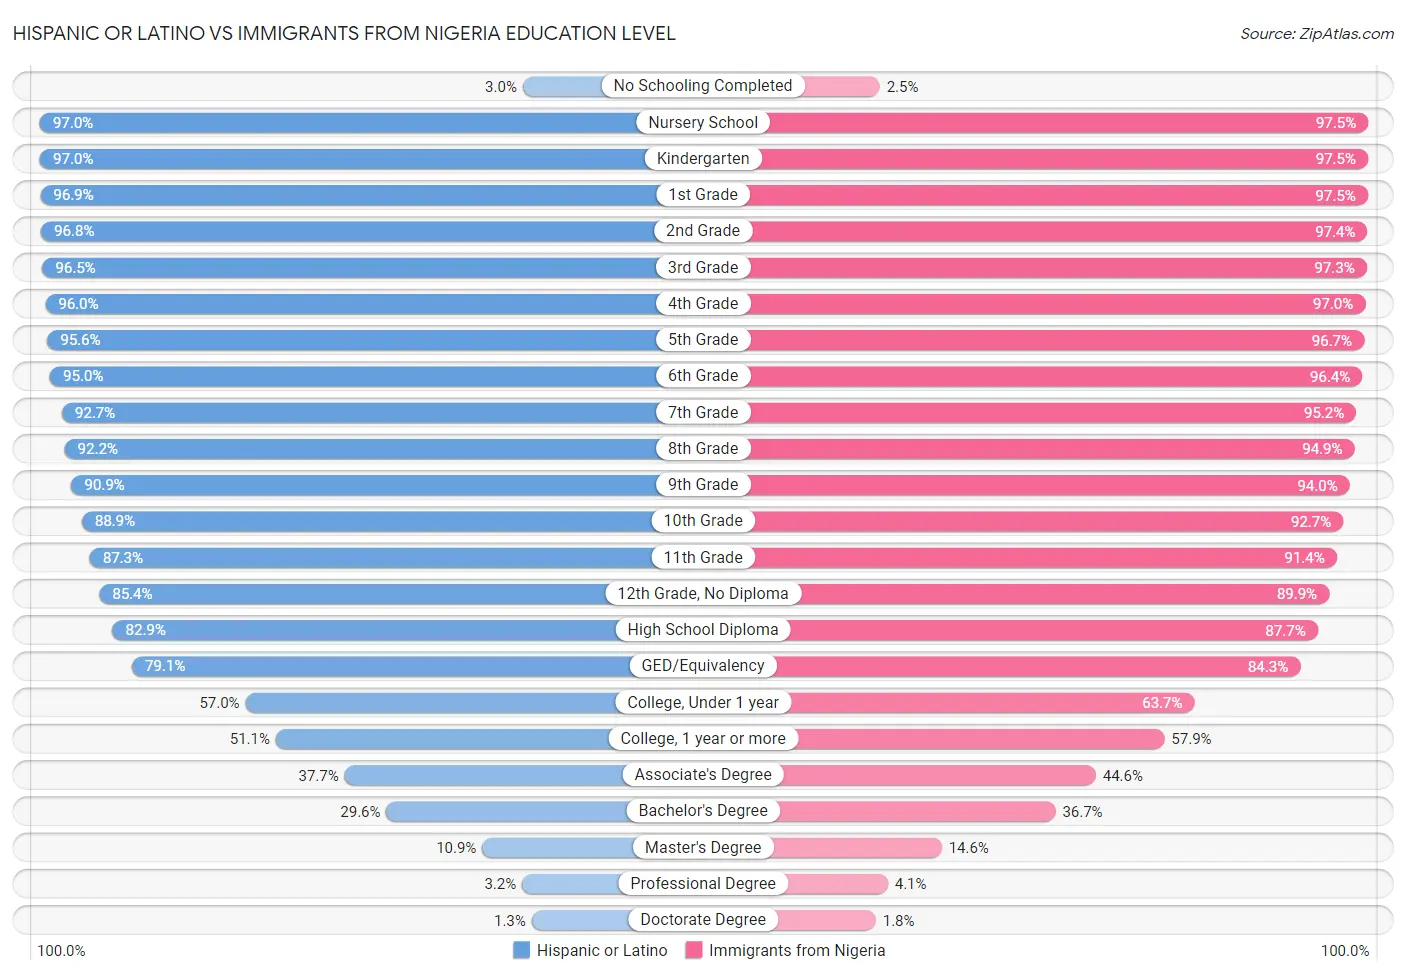 Hispanic or Latino vs Immigrants from Nigeria Education Level